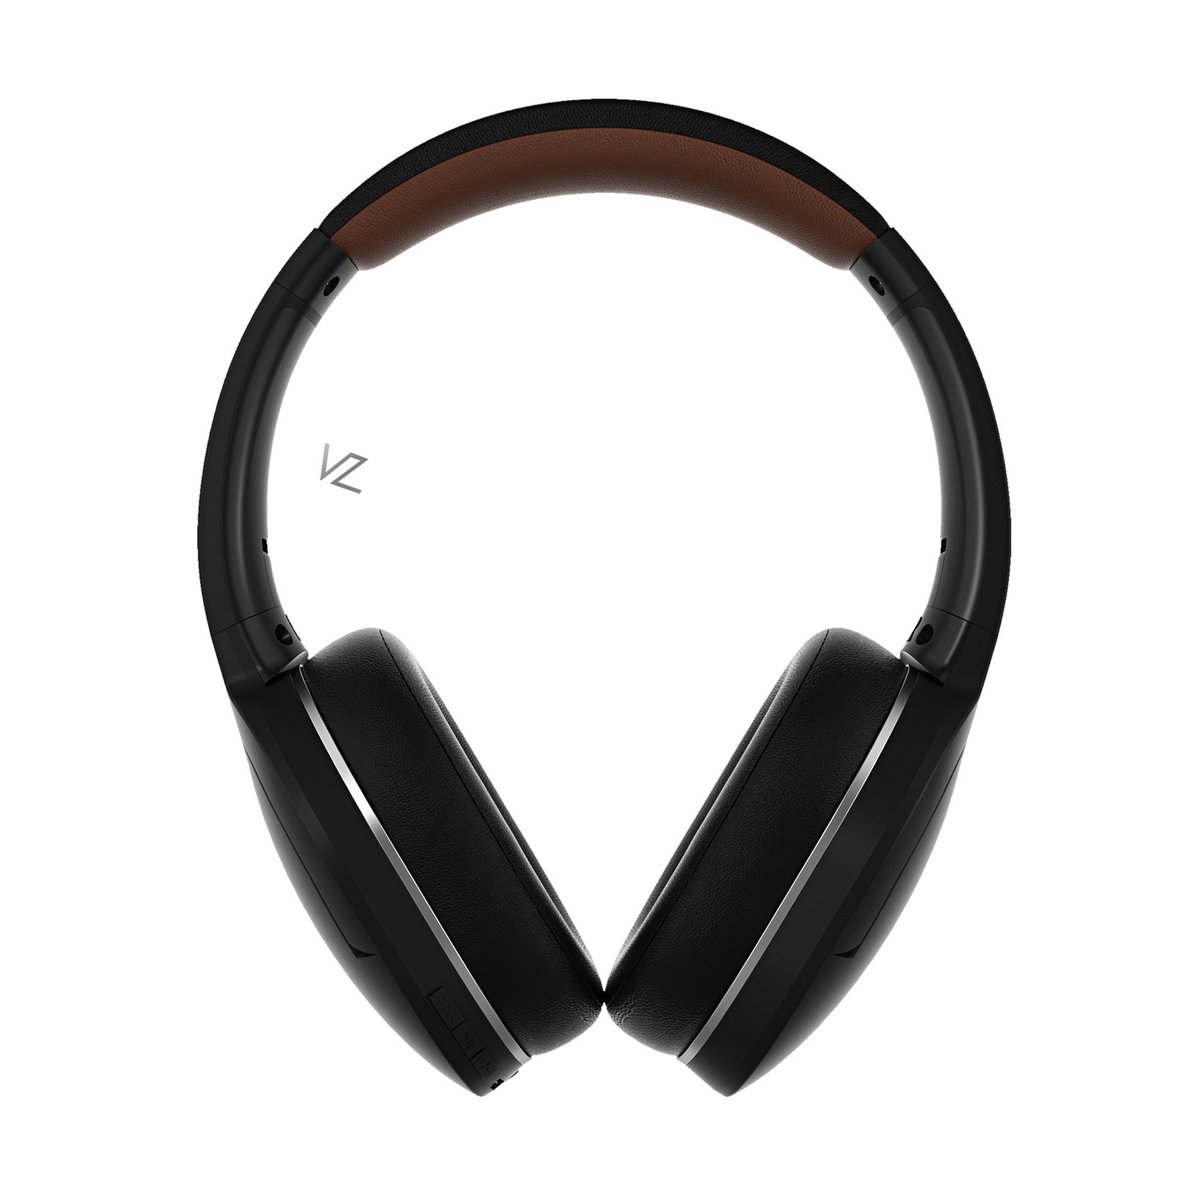 Voz Pro Audio Headset VZ7 Black & Brown